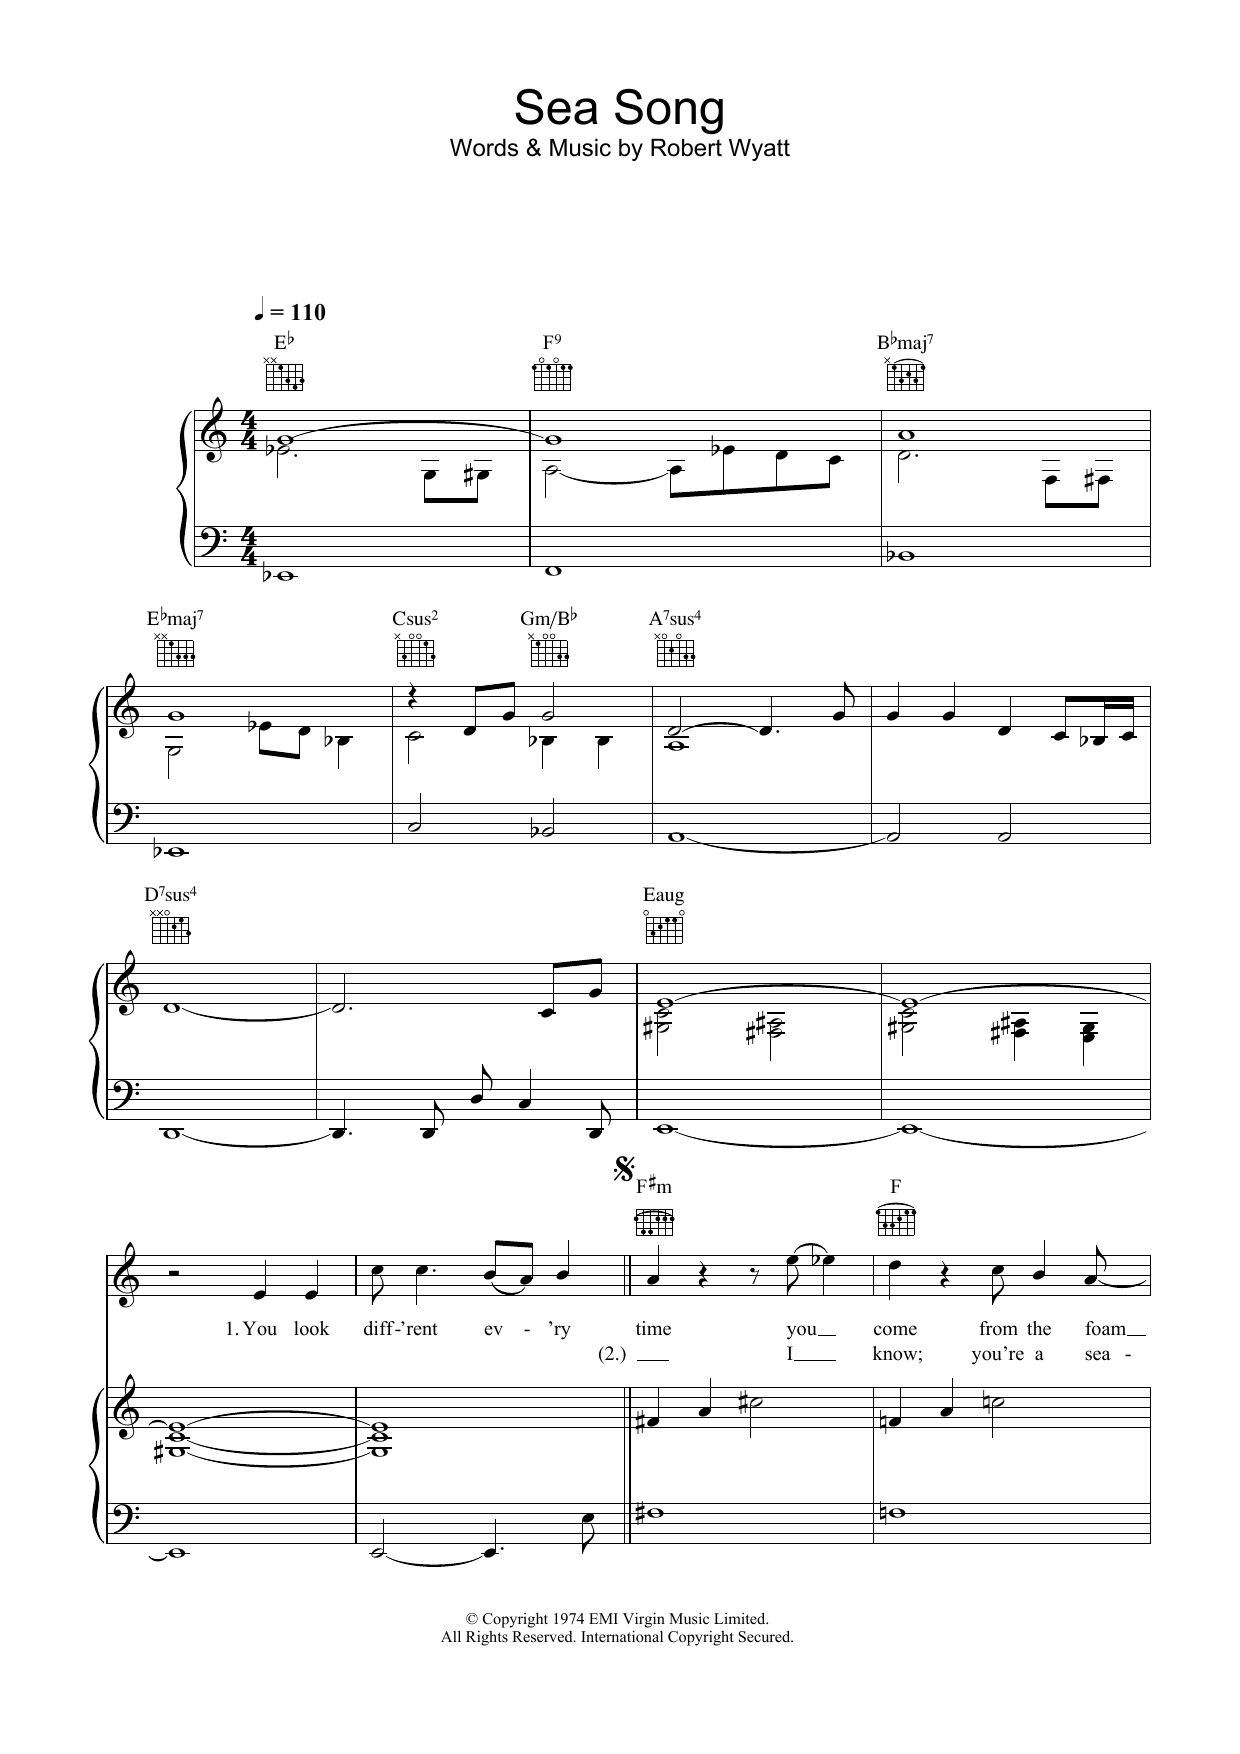 Robert Wyatt Sea Song Sheet Music Notes & Chords for Piano, Vocal & Guitar - Download or Print PDF